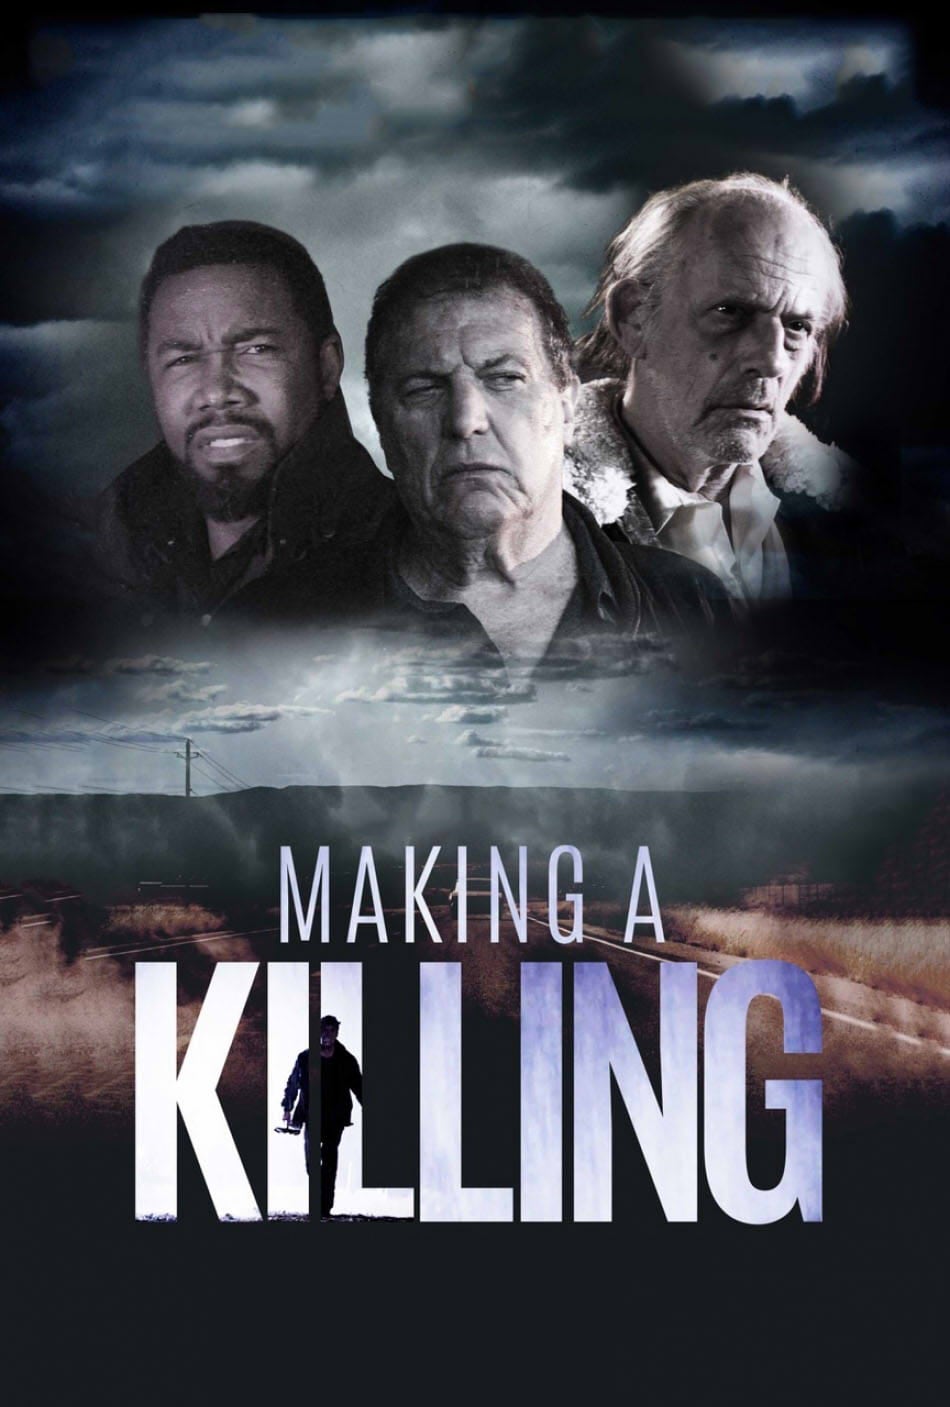 Plakat von "Making a Killing"